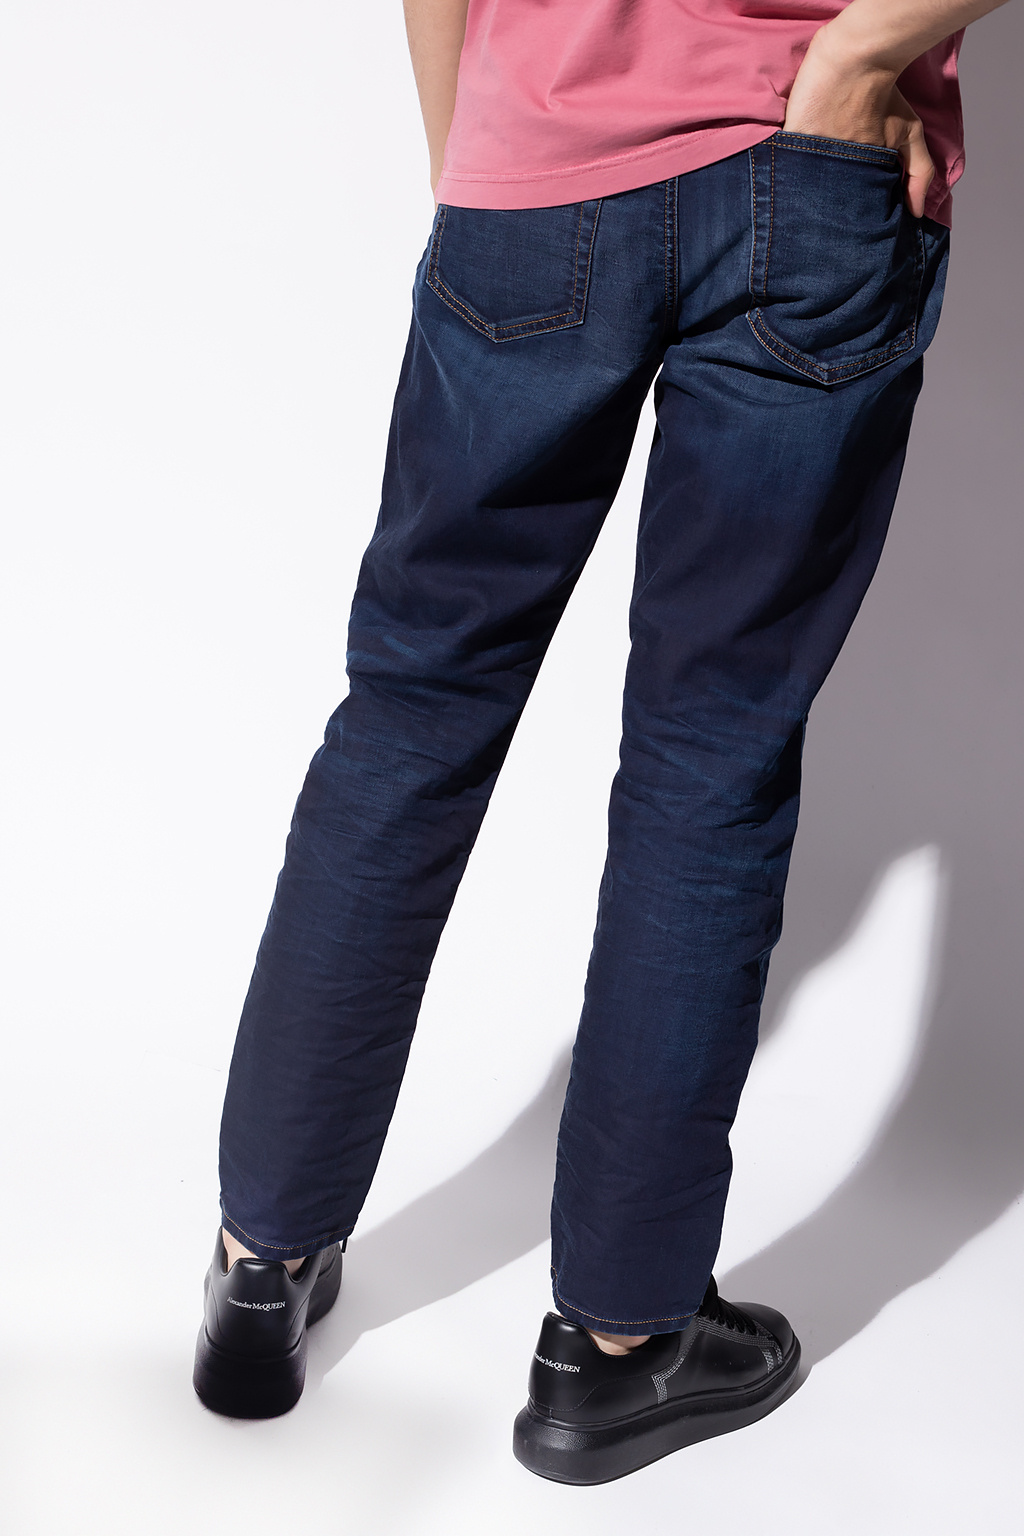 IetpShops GB - Adidas 3 Stripe - Vider Jogg' jeans - 'D